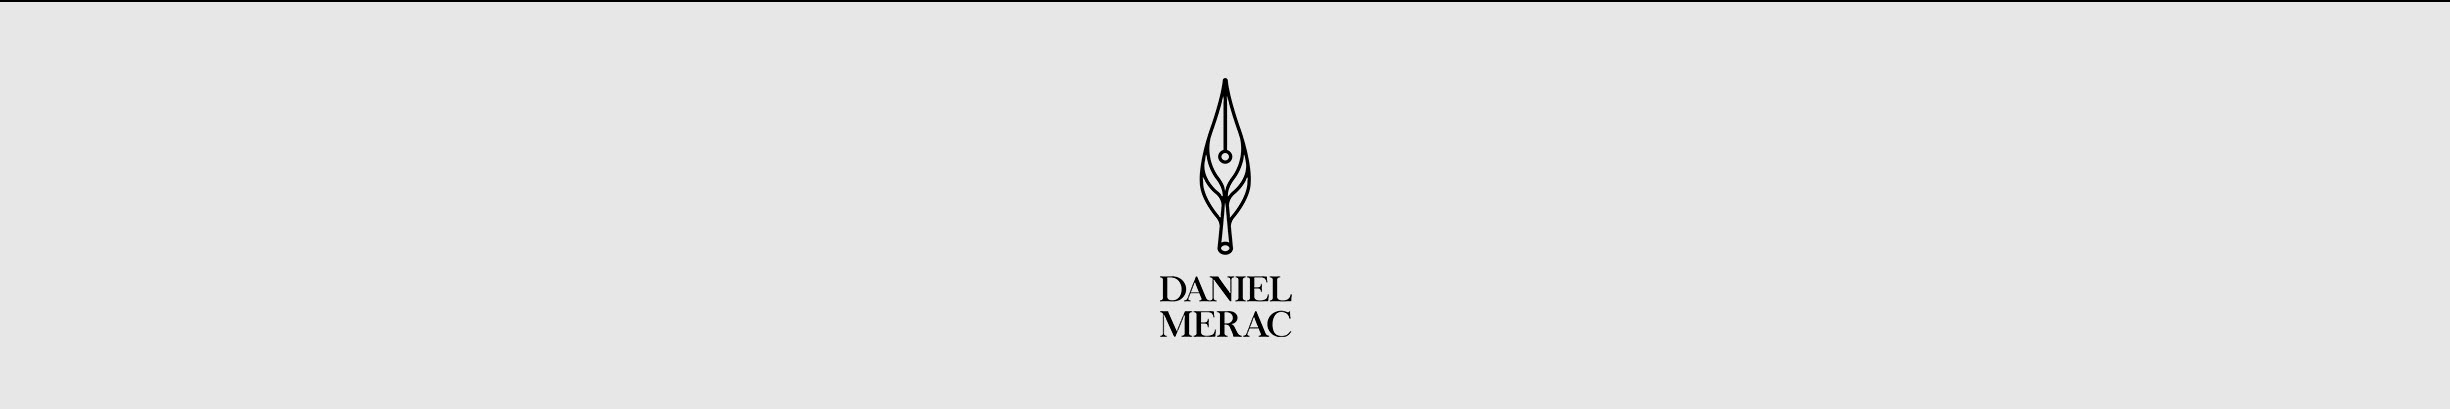 Daniel Merac's profile banner